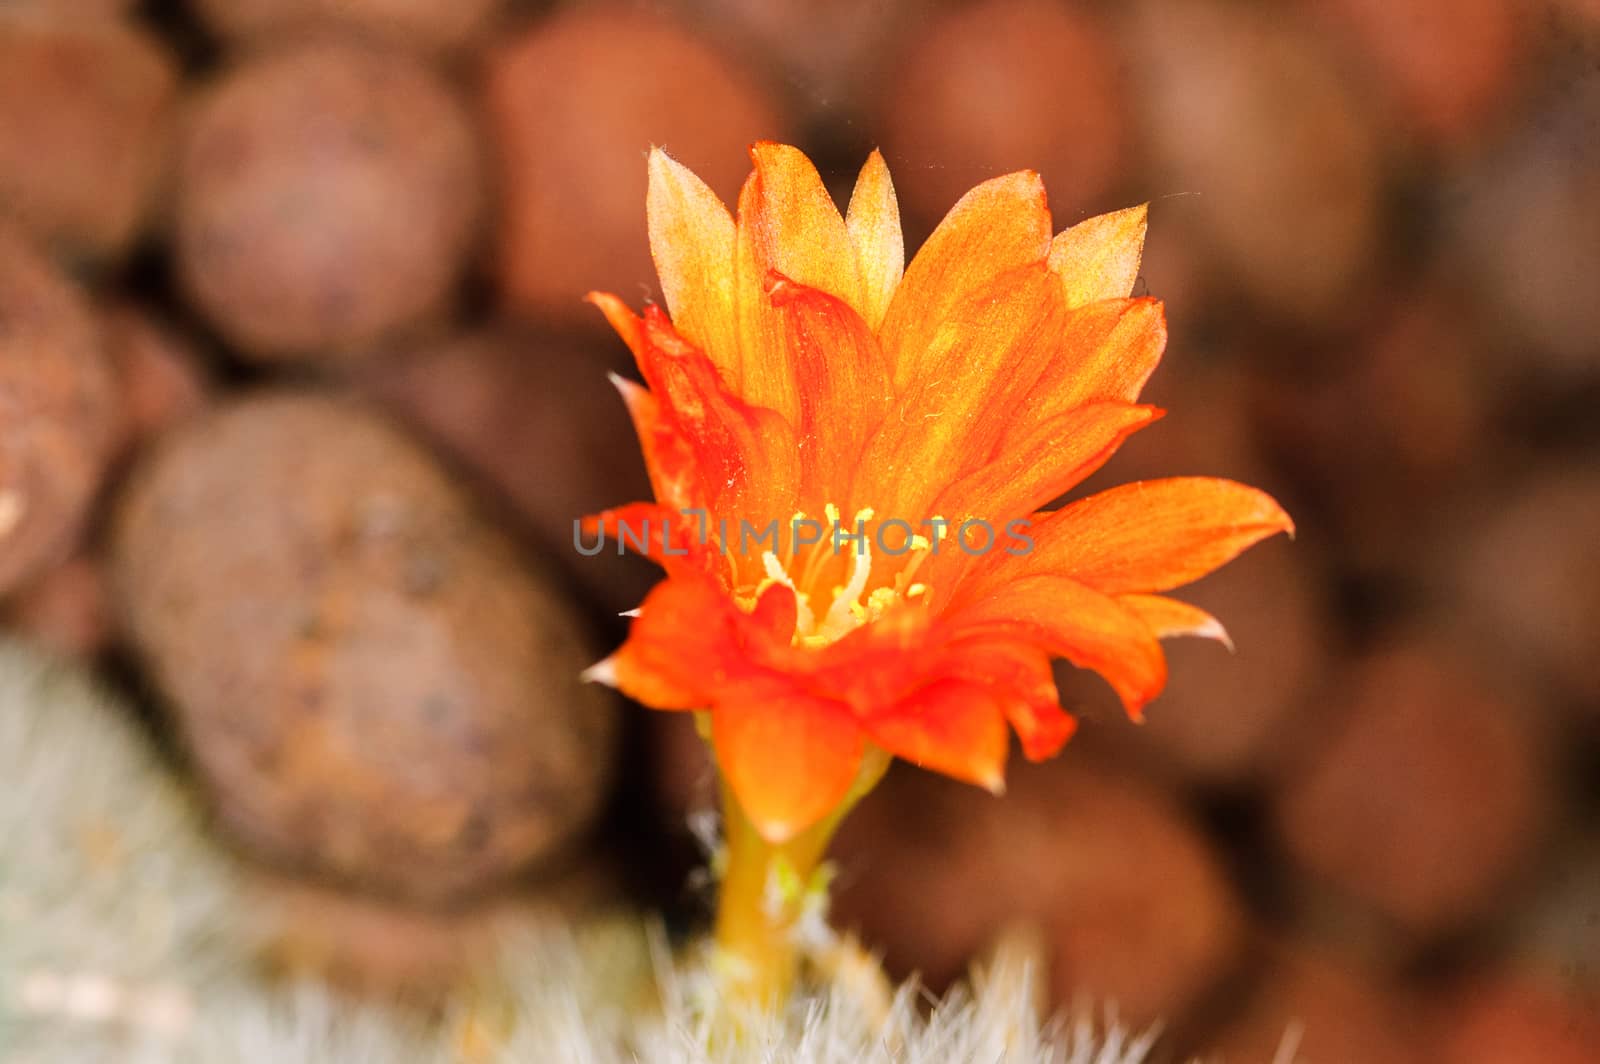 Blossom of a cactus  close-up shoot background stone